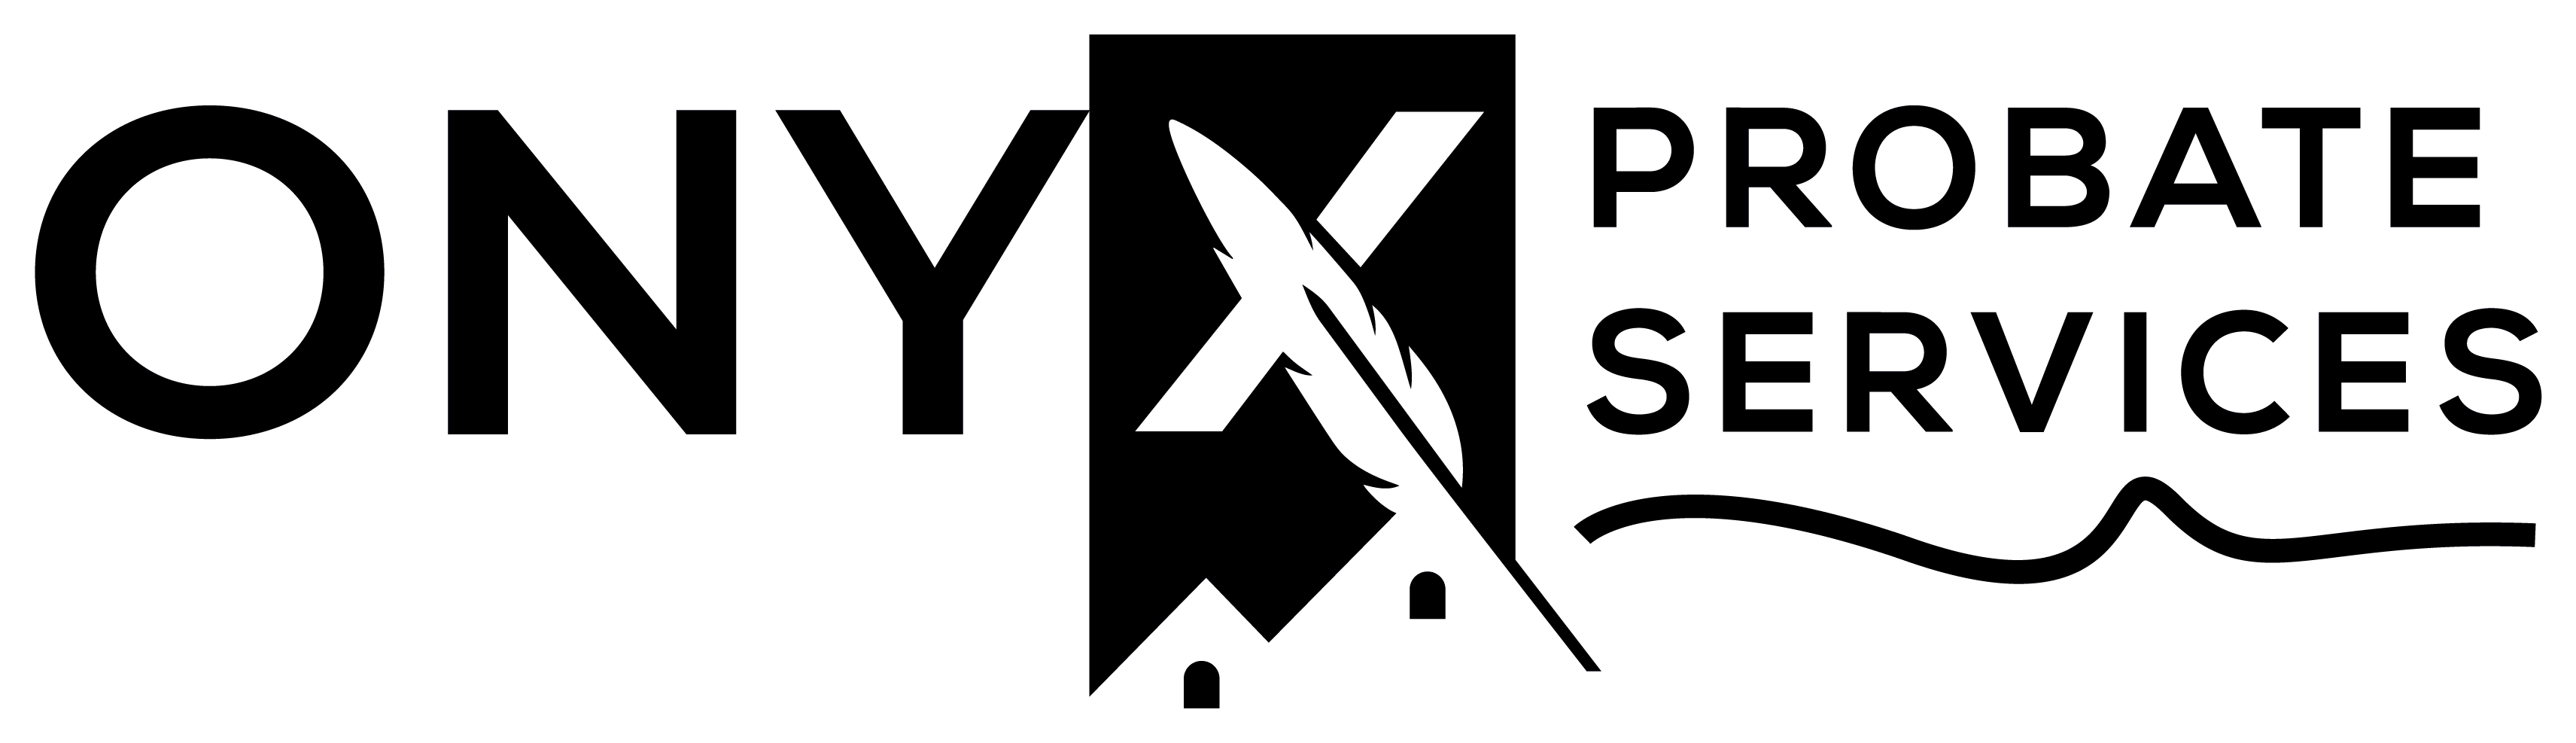 Onyx Probate Services logo